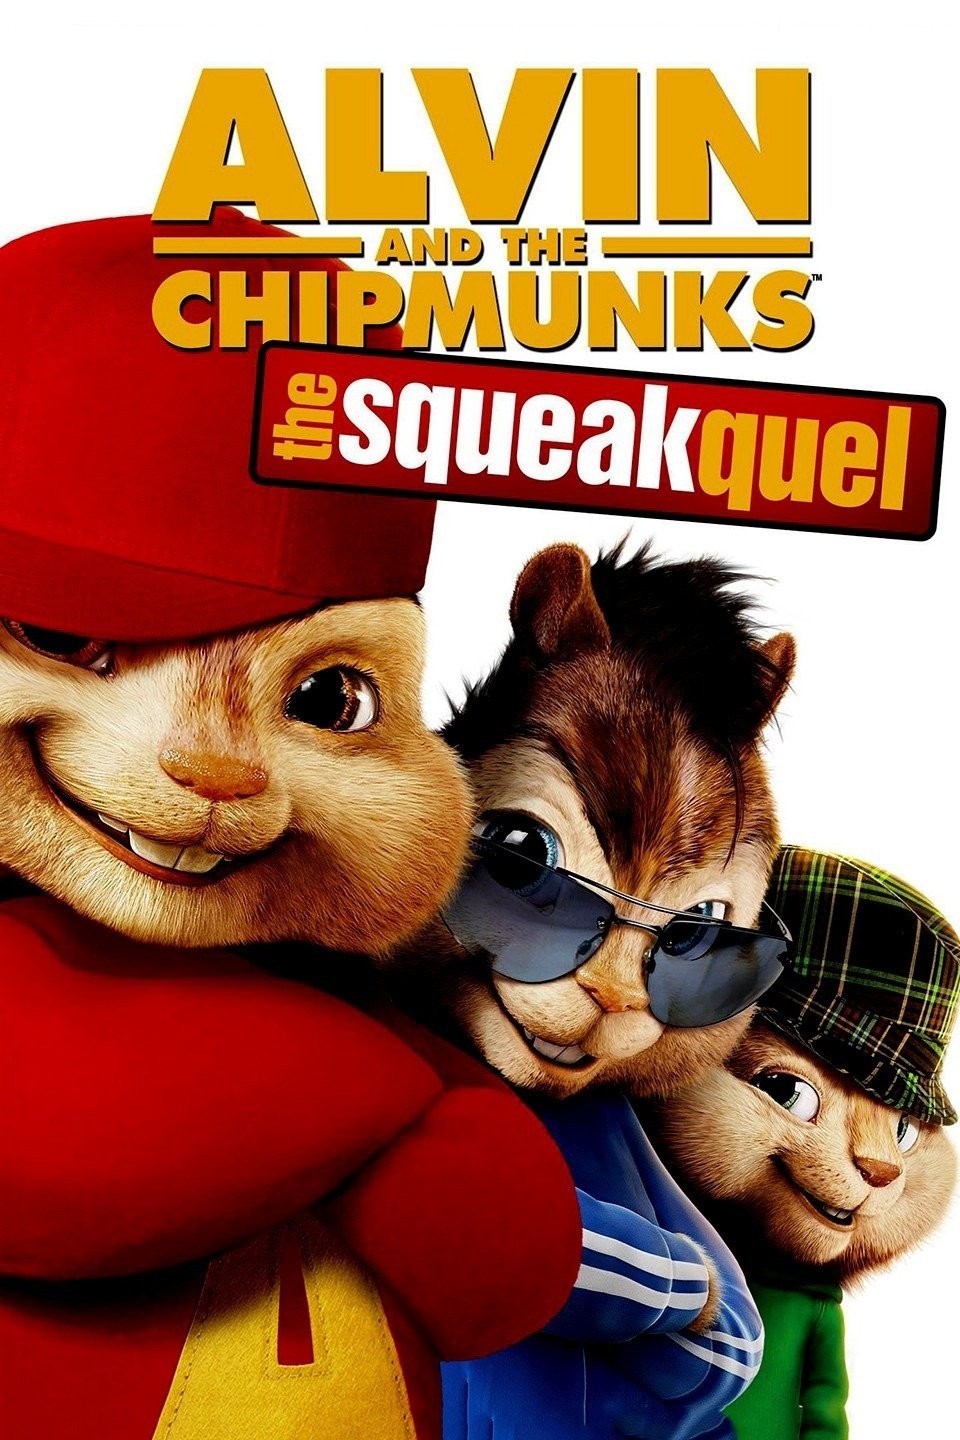 ALVINNN and The Chipmunks - Nickelodeon - Watch on Paramount Plus